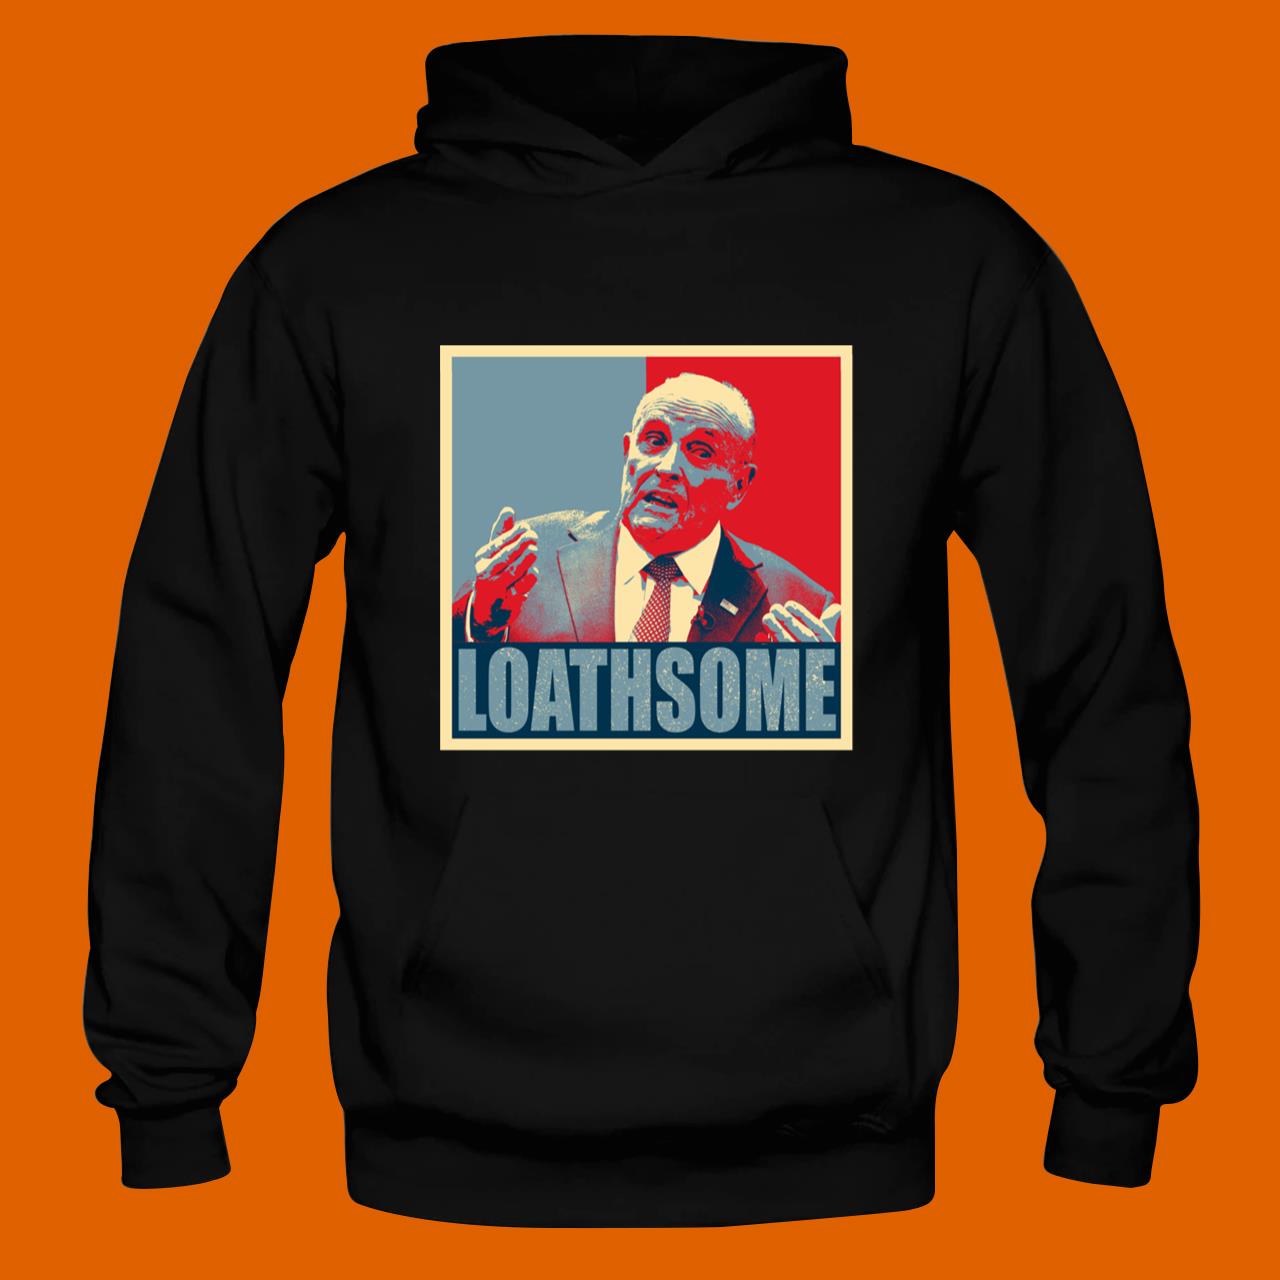 Loathsome - Rudy Giuliani Classic T-Shirt